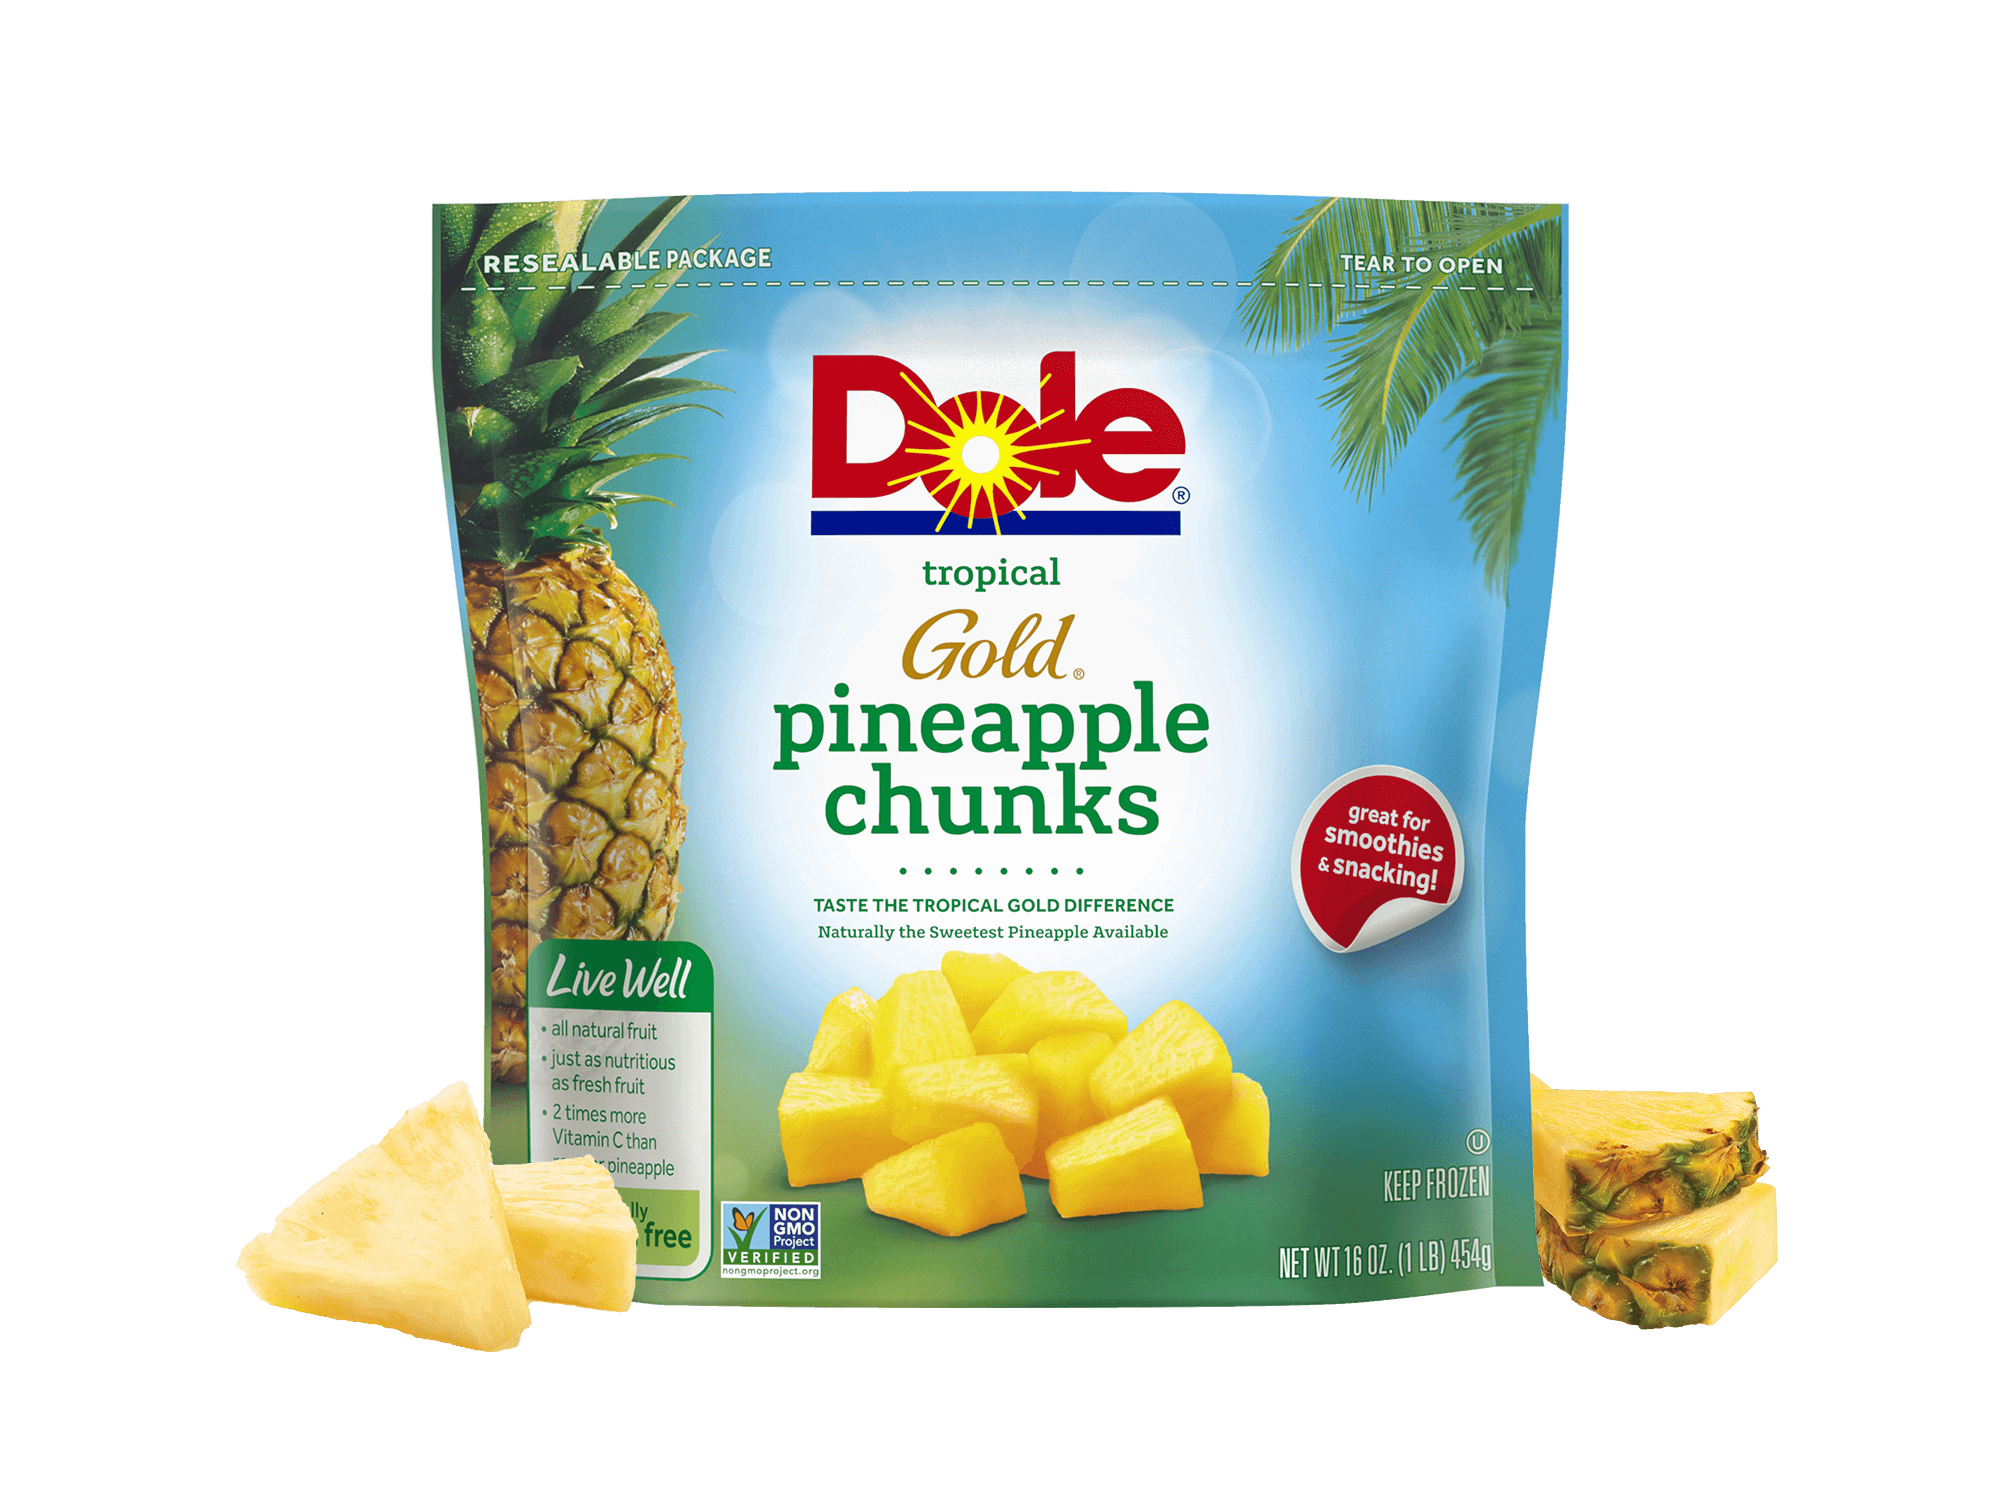 Beleaves Frozen Pineapple Tidbits - Kayco